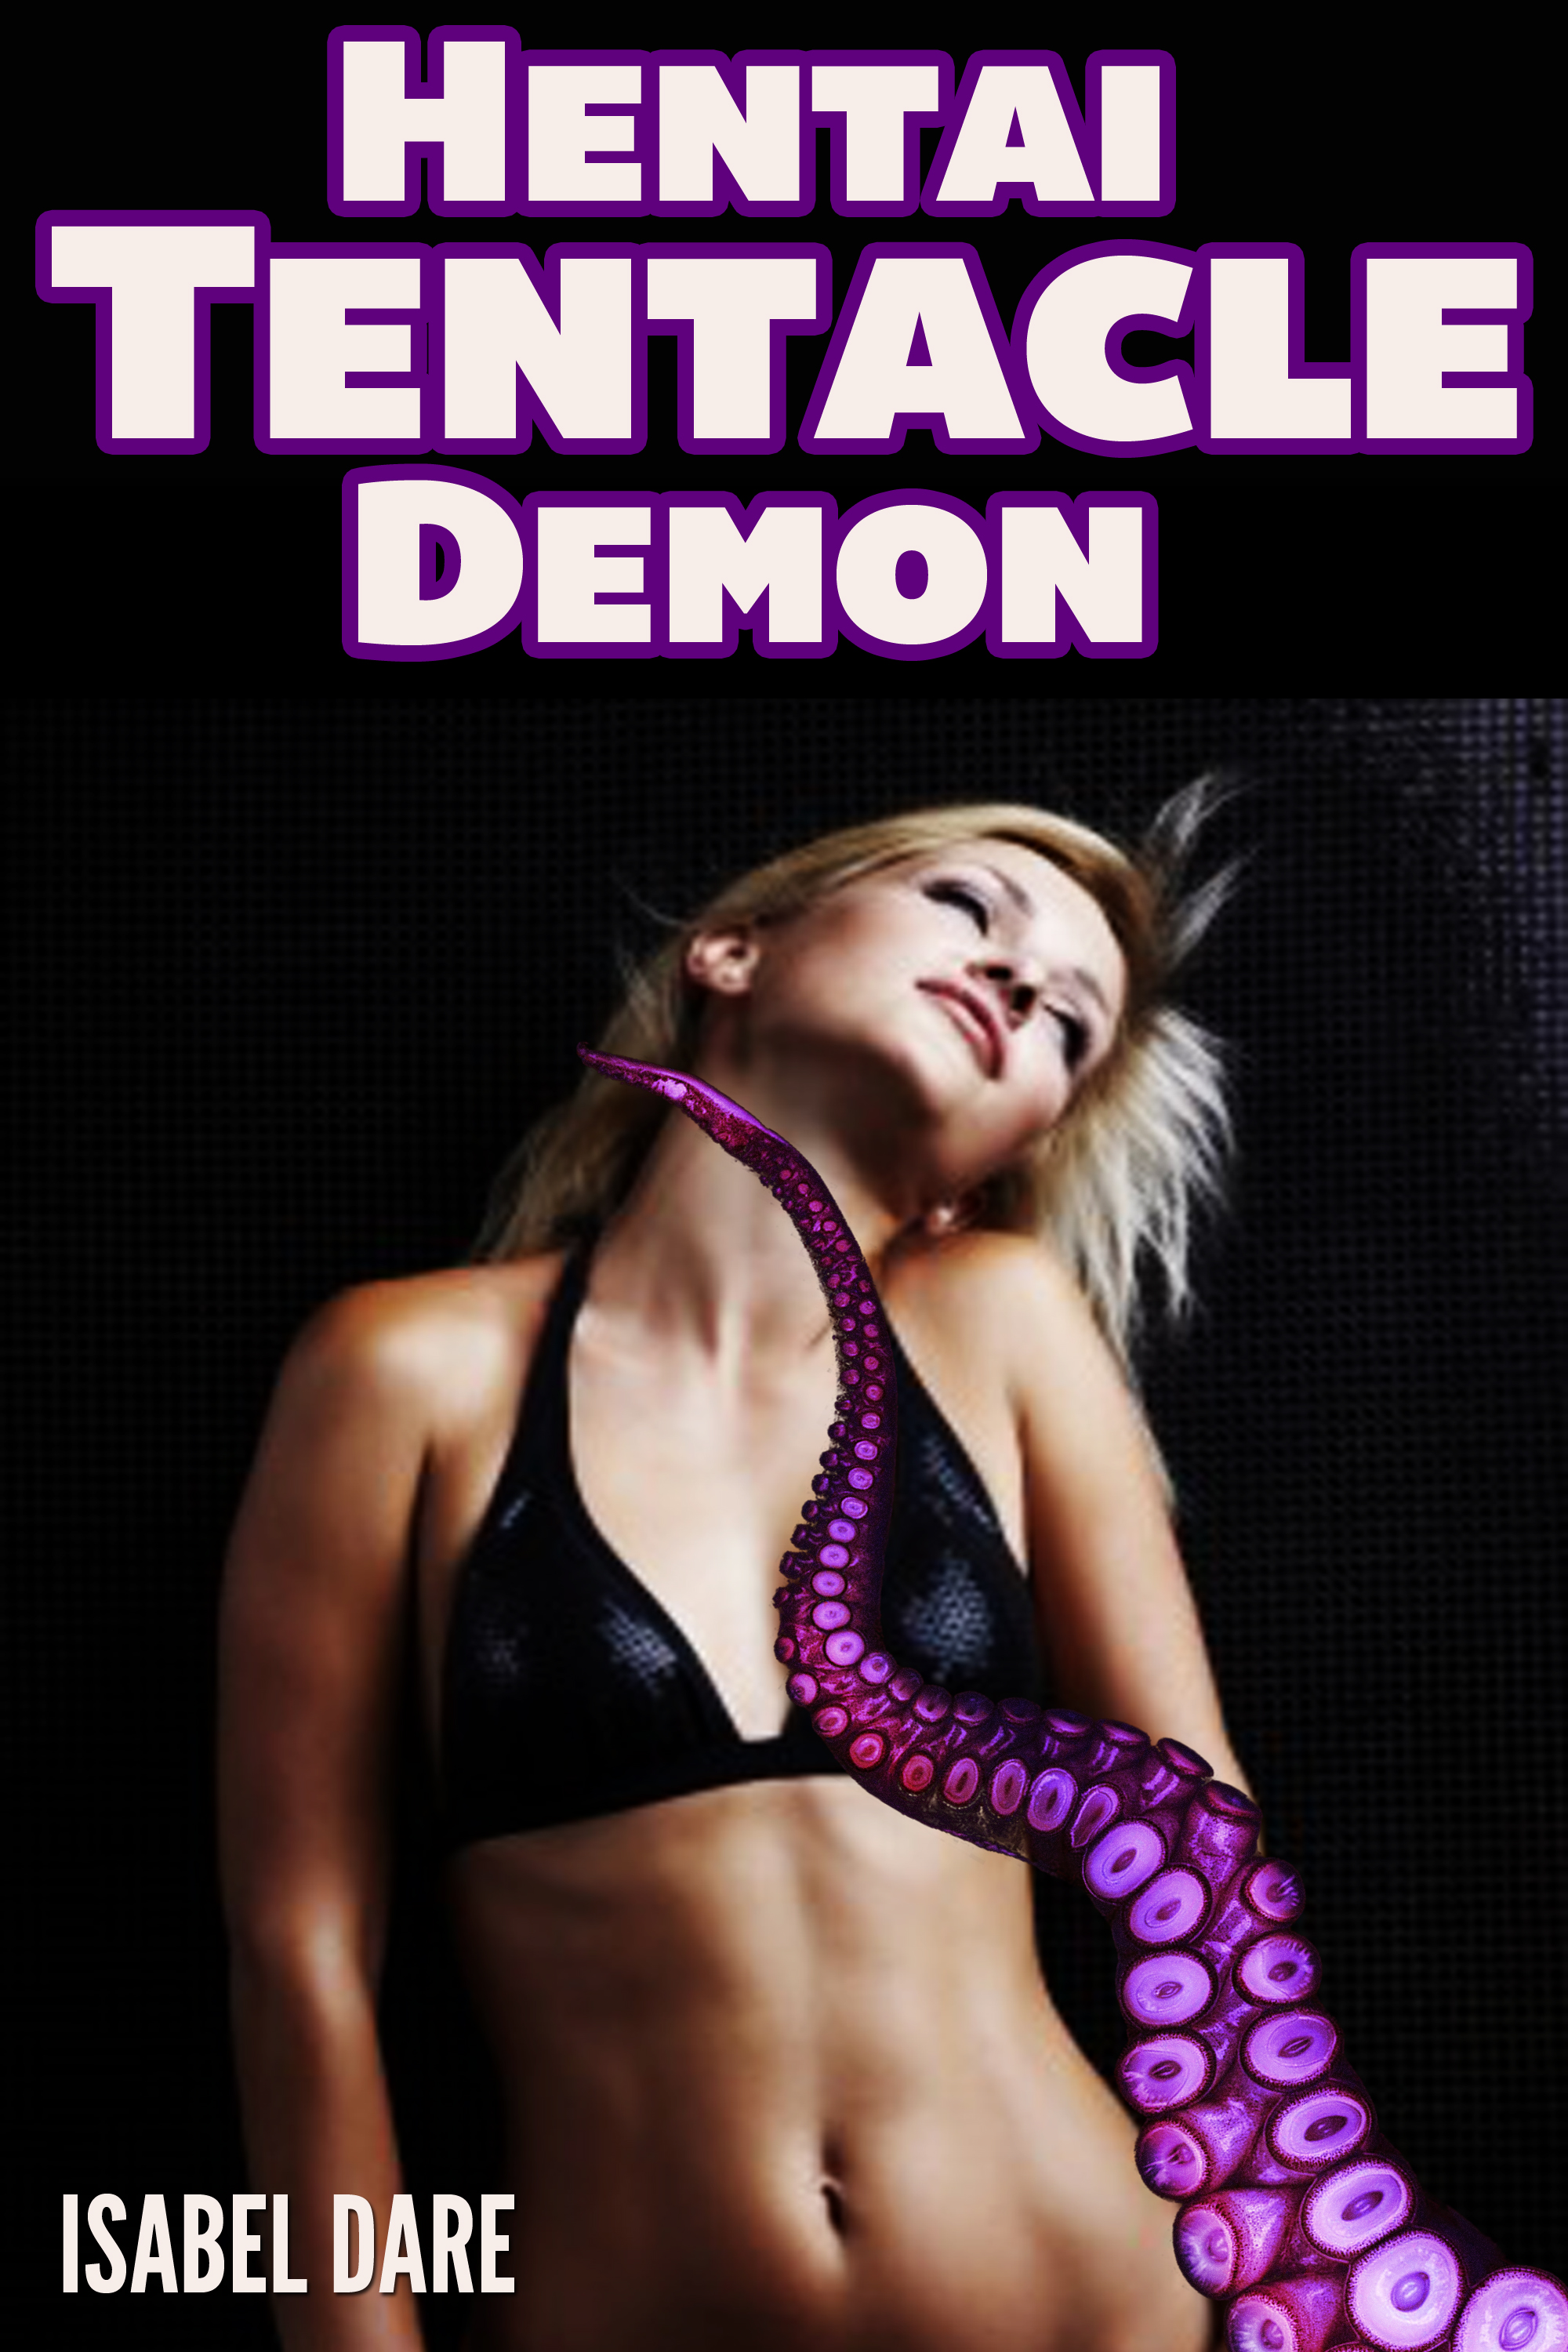 Hentai Ebook Download - Hentai Tentacle Demon (Tentacle Monster Erotica), an Ebook by Isabel Dare